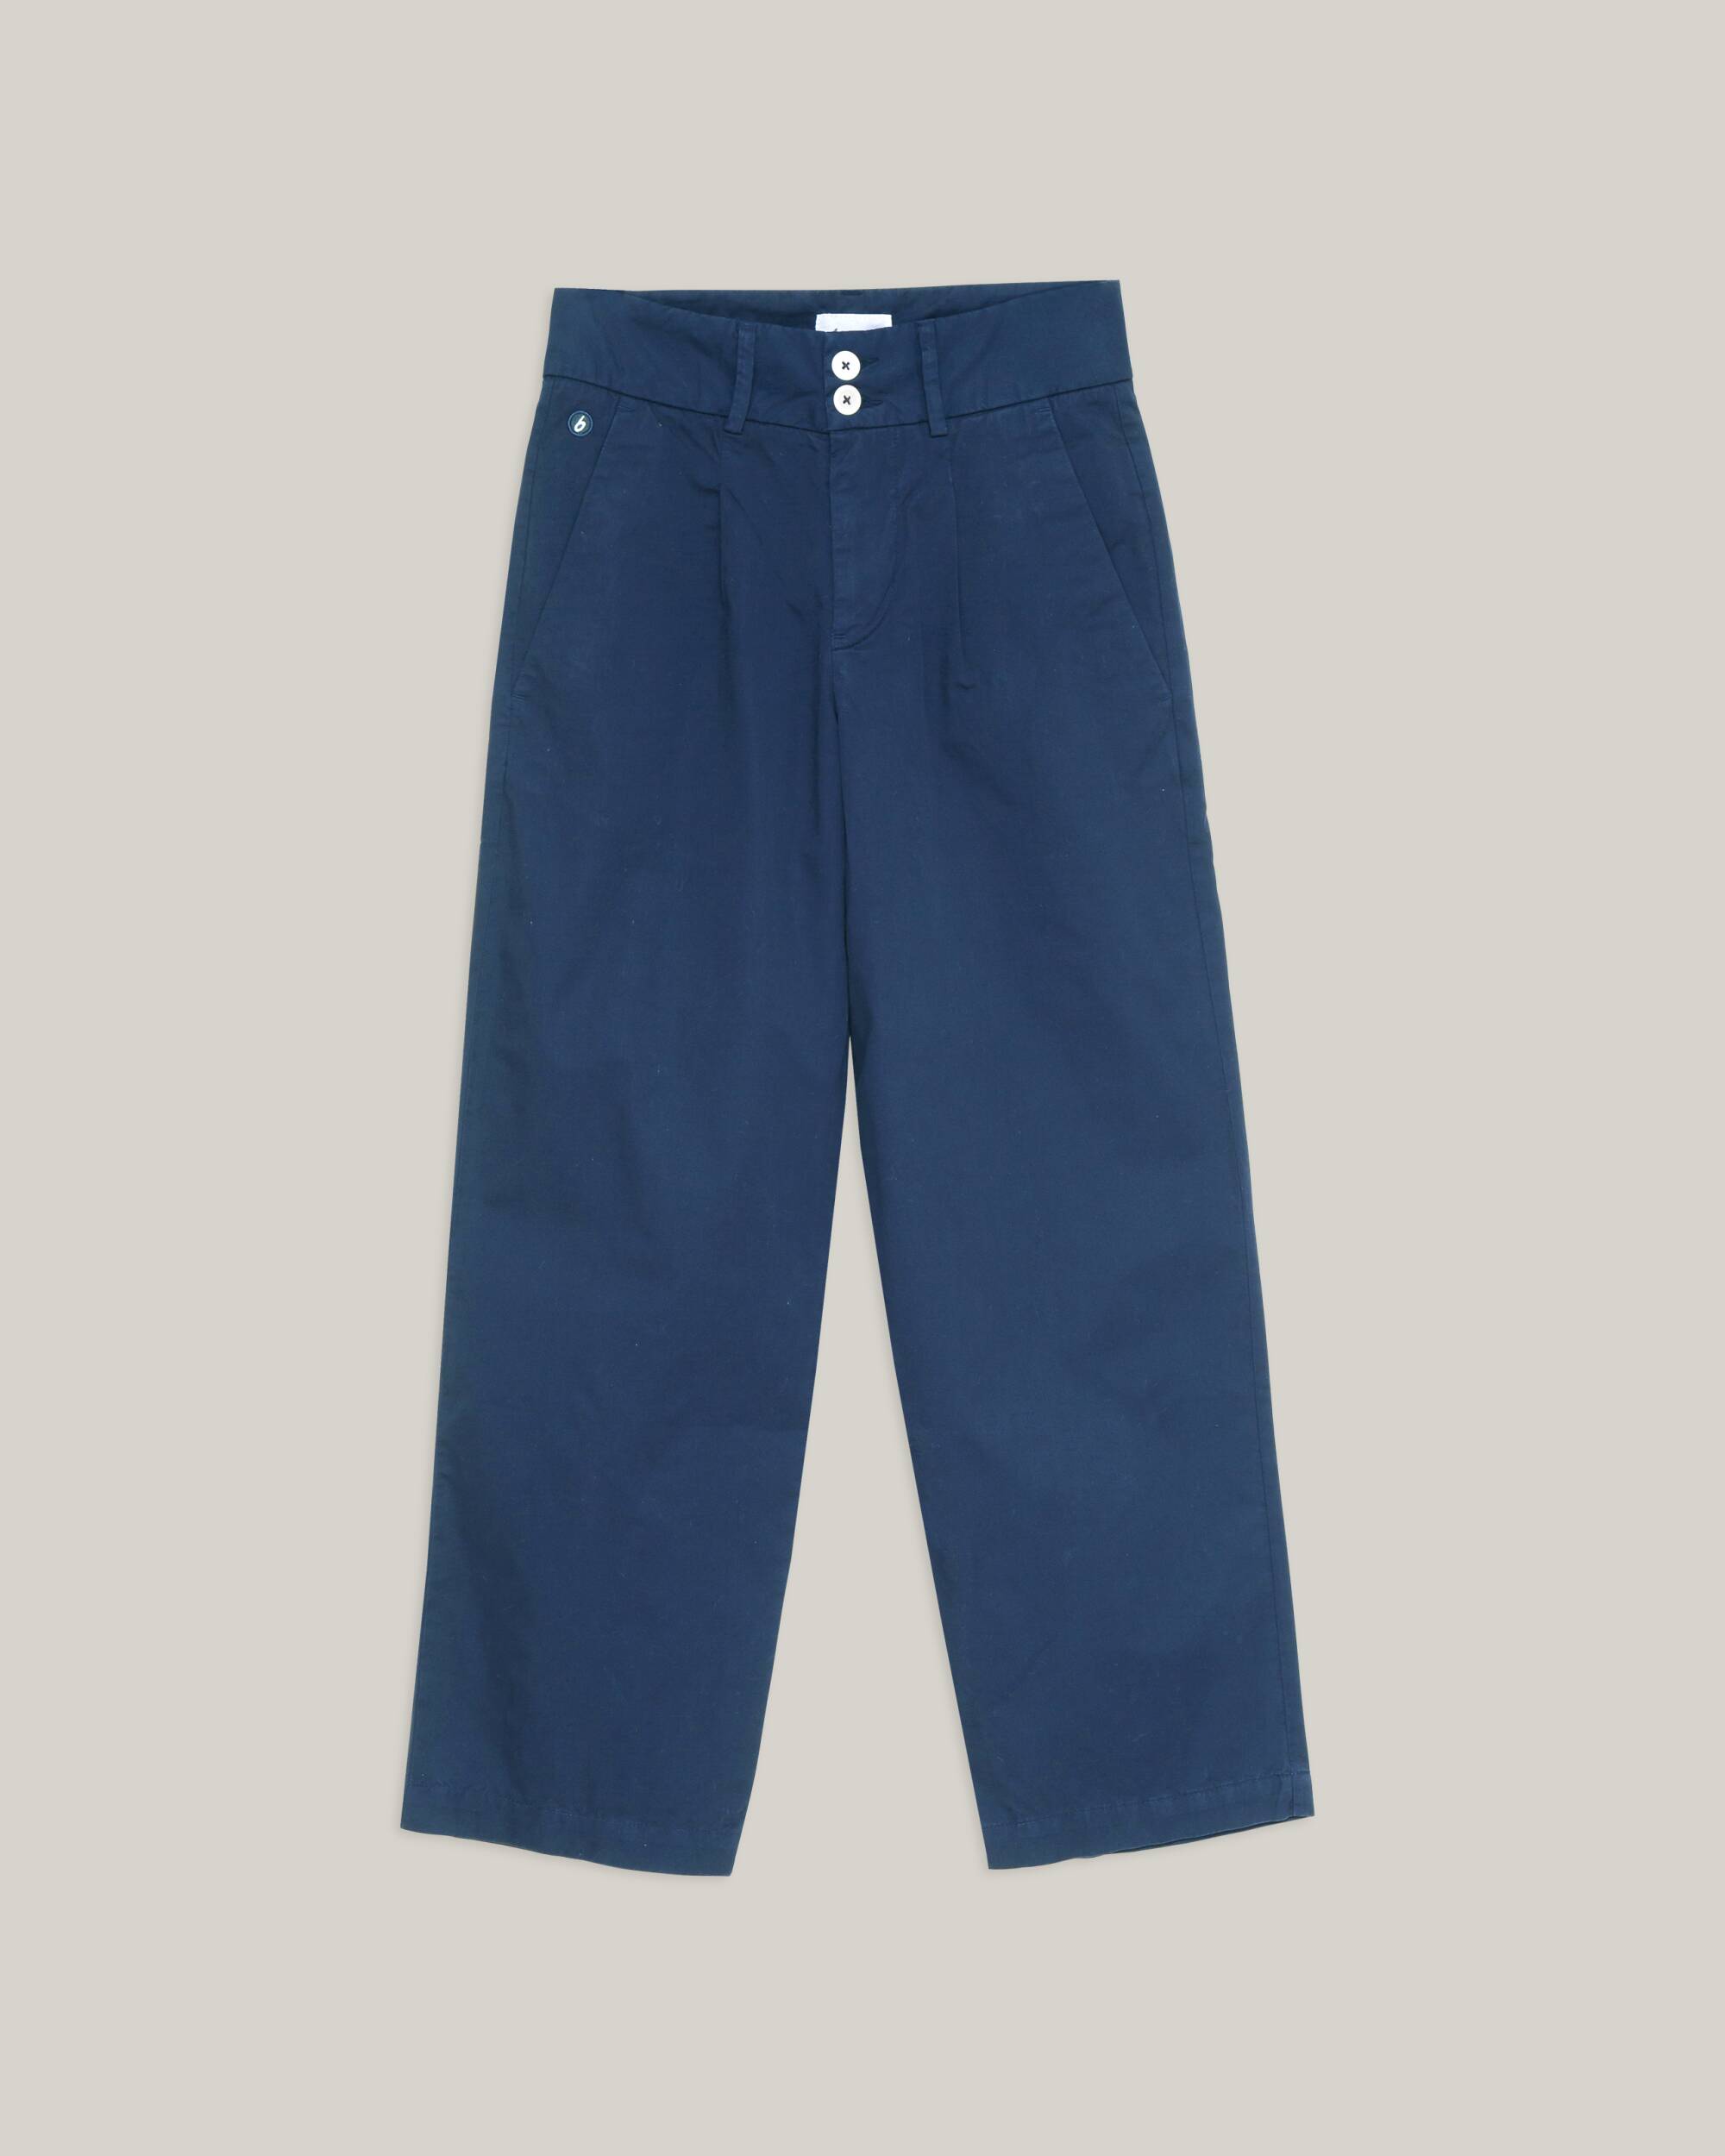 Pantalon chino bleu foncé en coton 100% biologique de Brava Fabrics